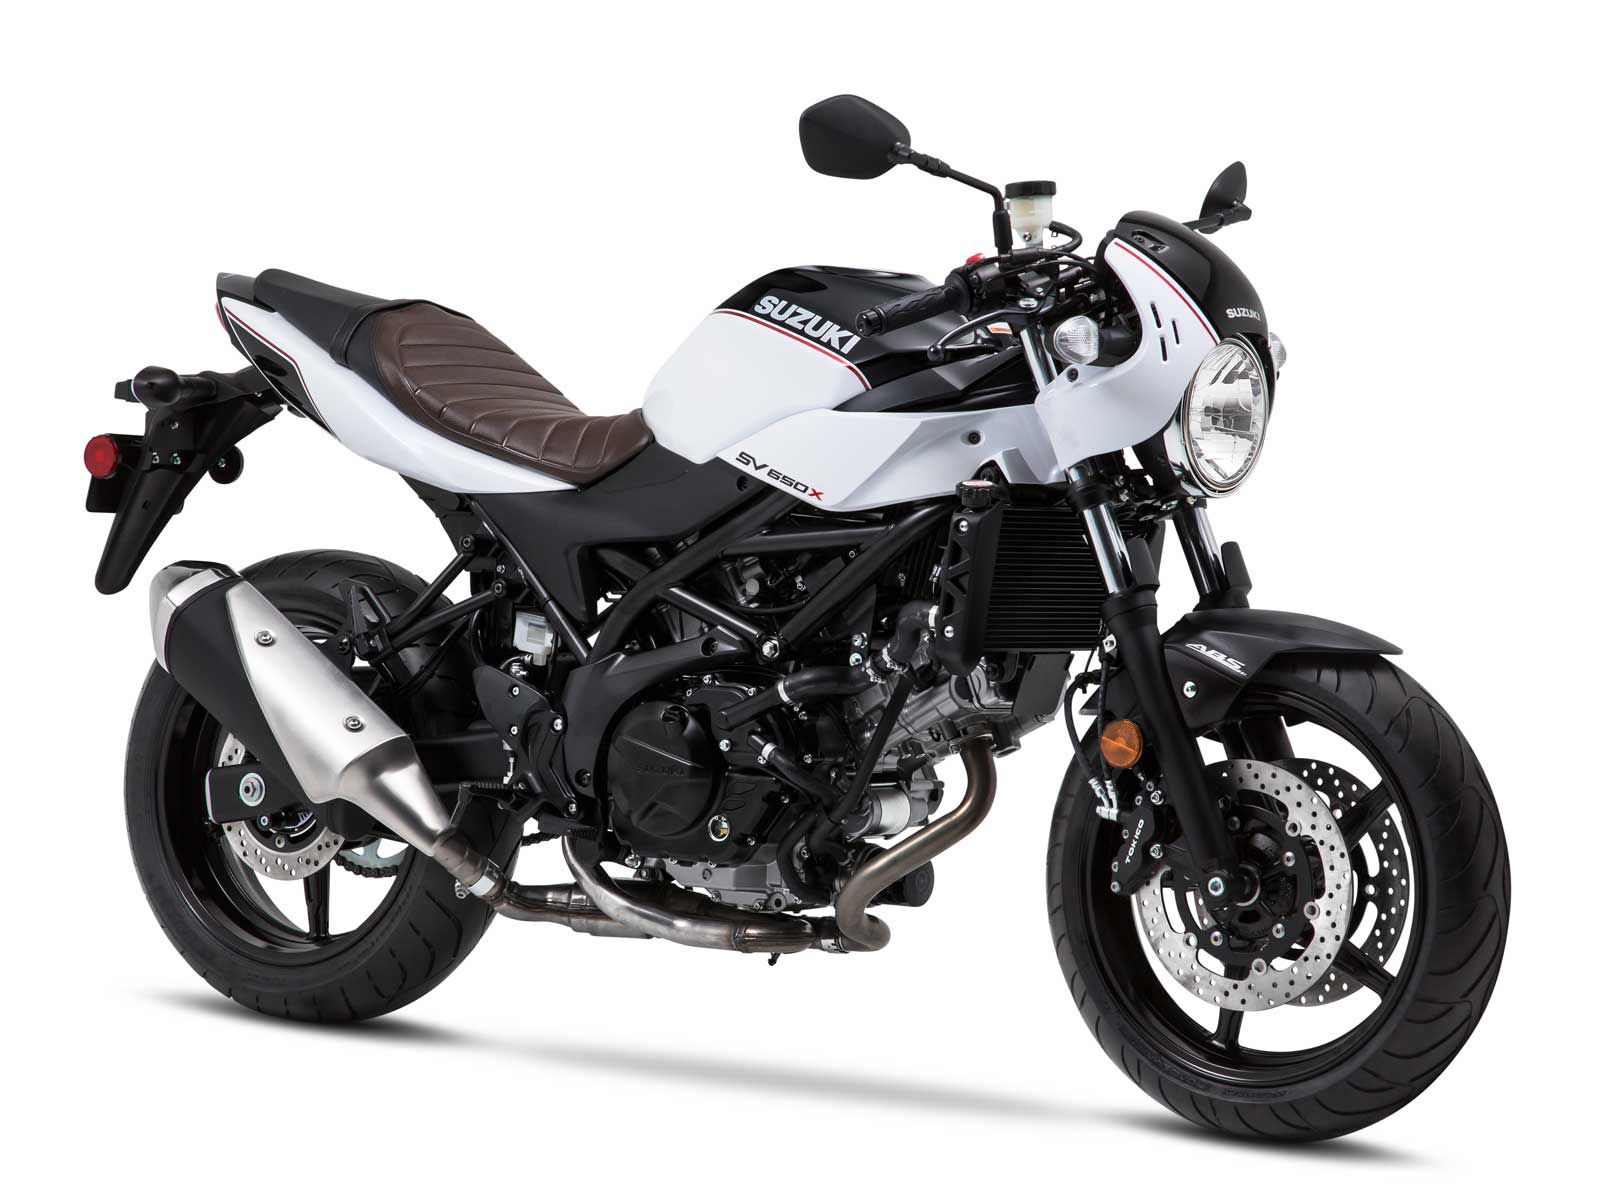 2019 Suzuki Sv650x Cafe First Look Review Motorcyclist